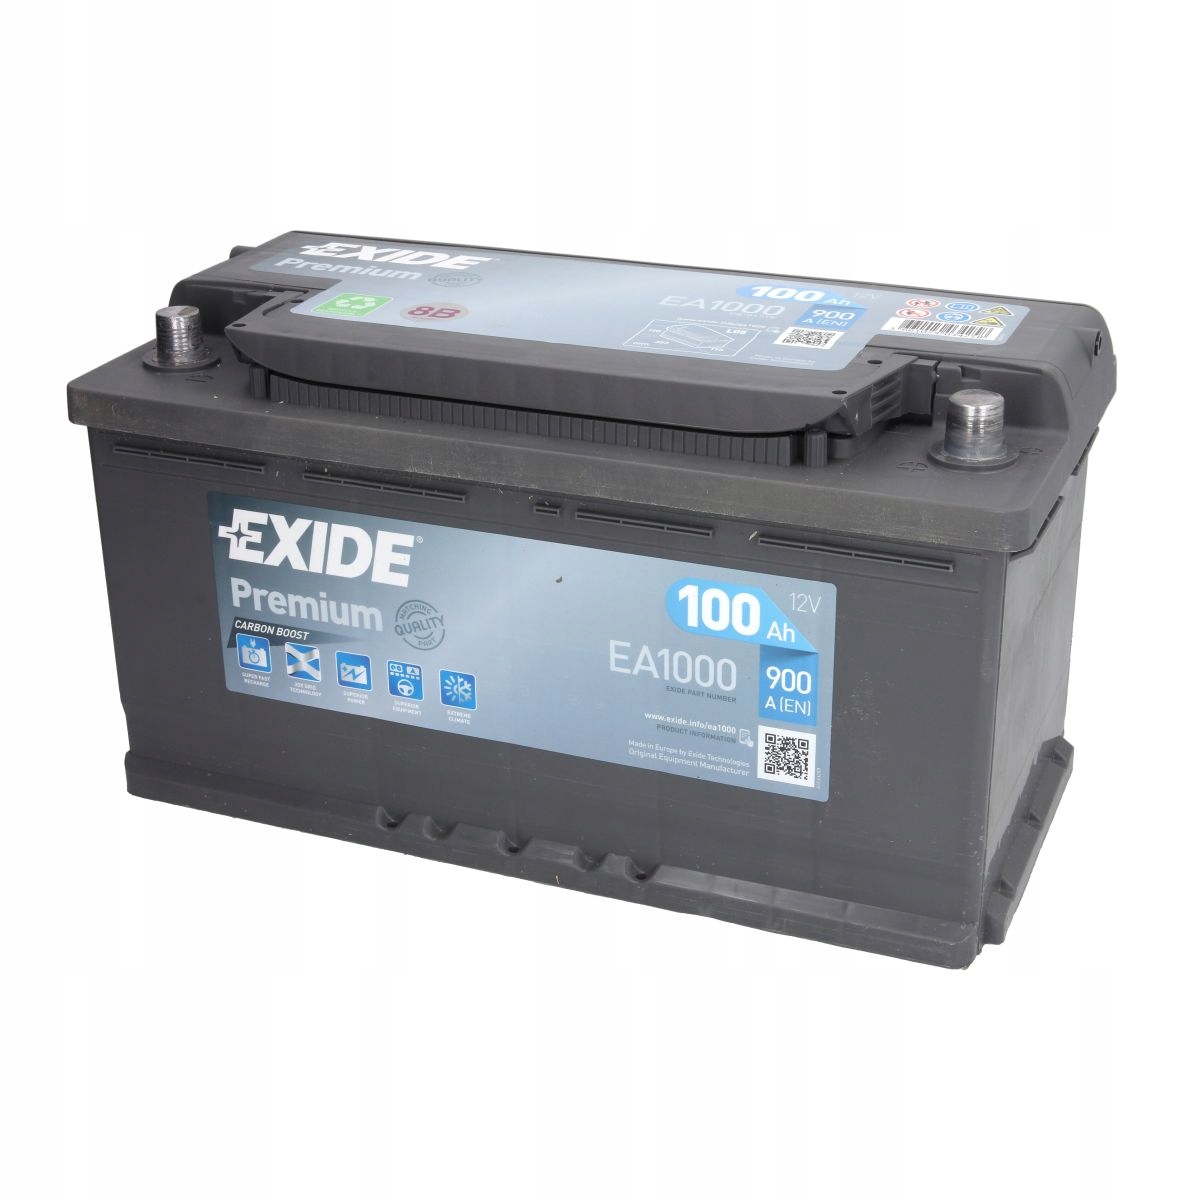 Baterie EXIDE PREMIUM 100Ah 900A P+ za 4683 Kč - Allegro